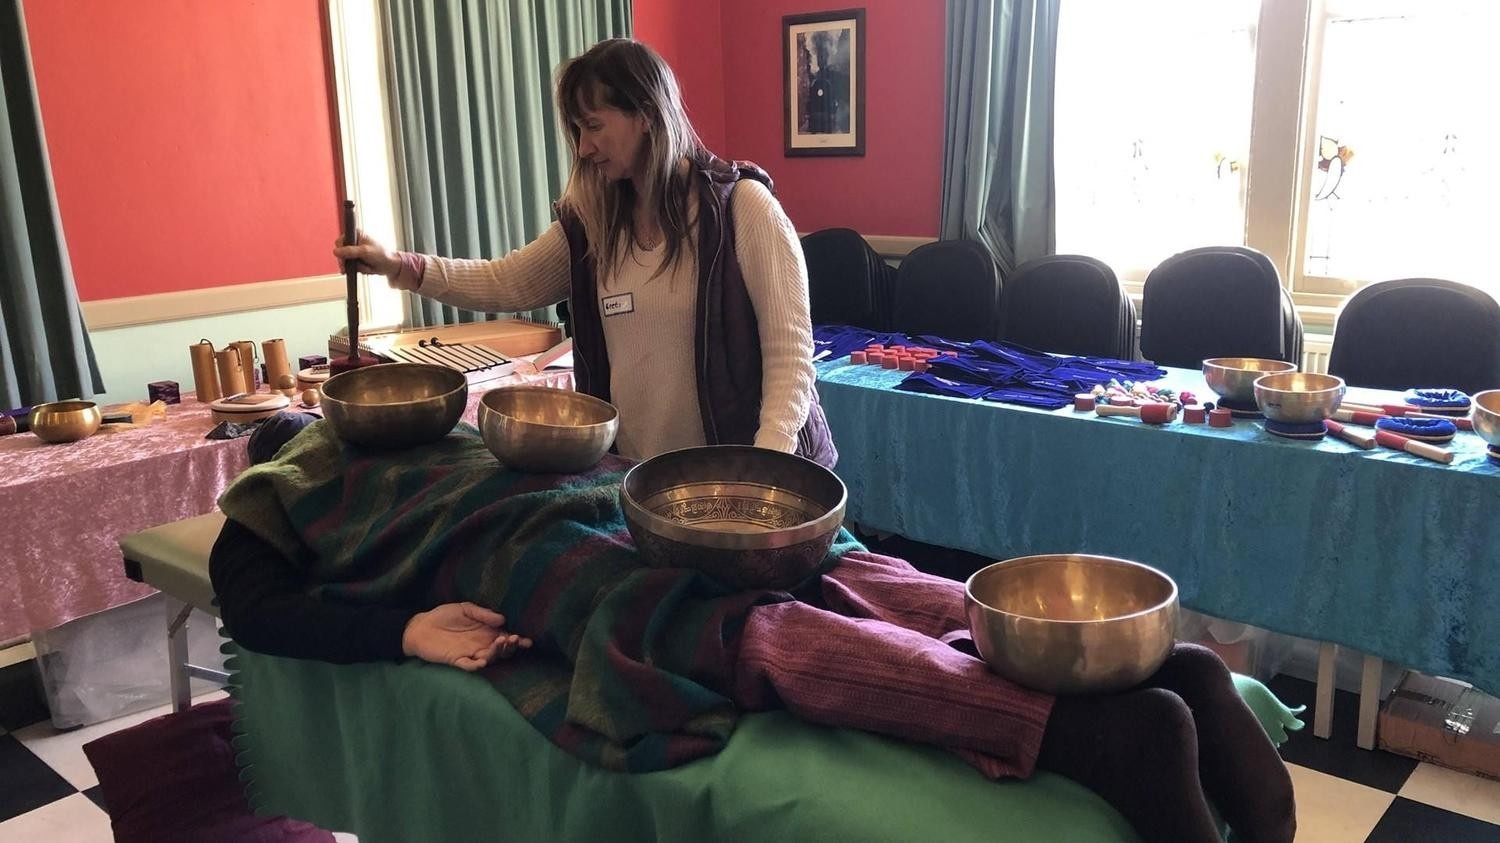 BYRON SHIRE - Sound Healing With Tibetan Singing Bowls (Byron Shire, Australia)